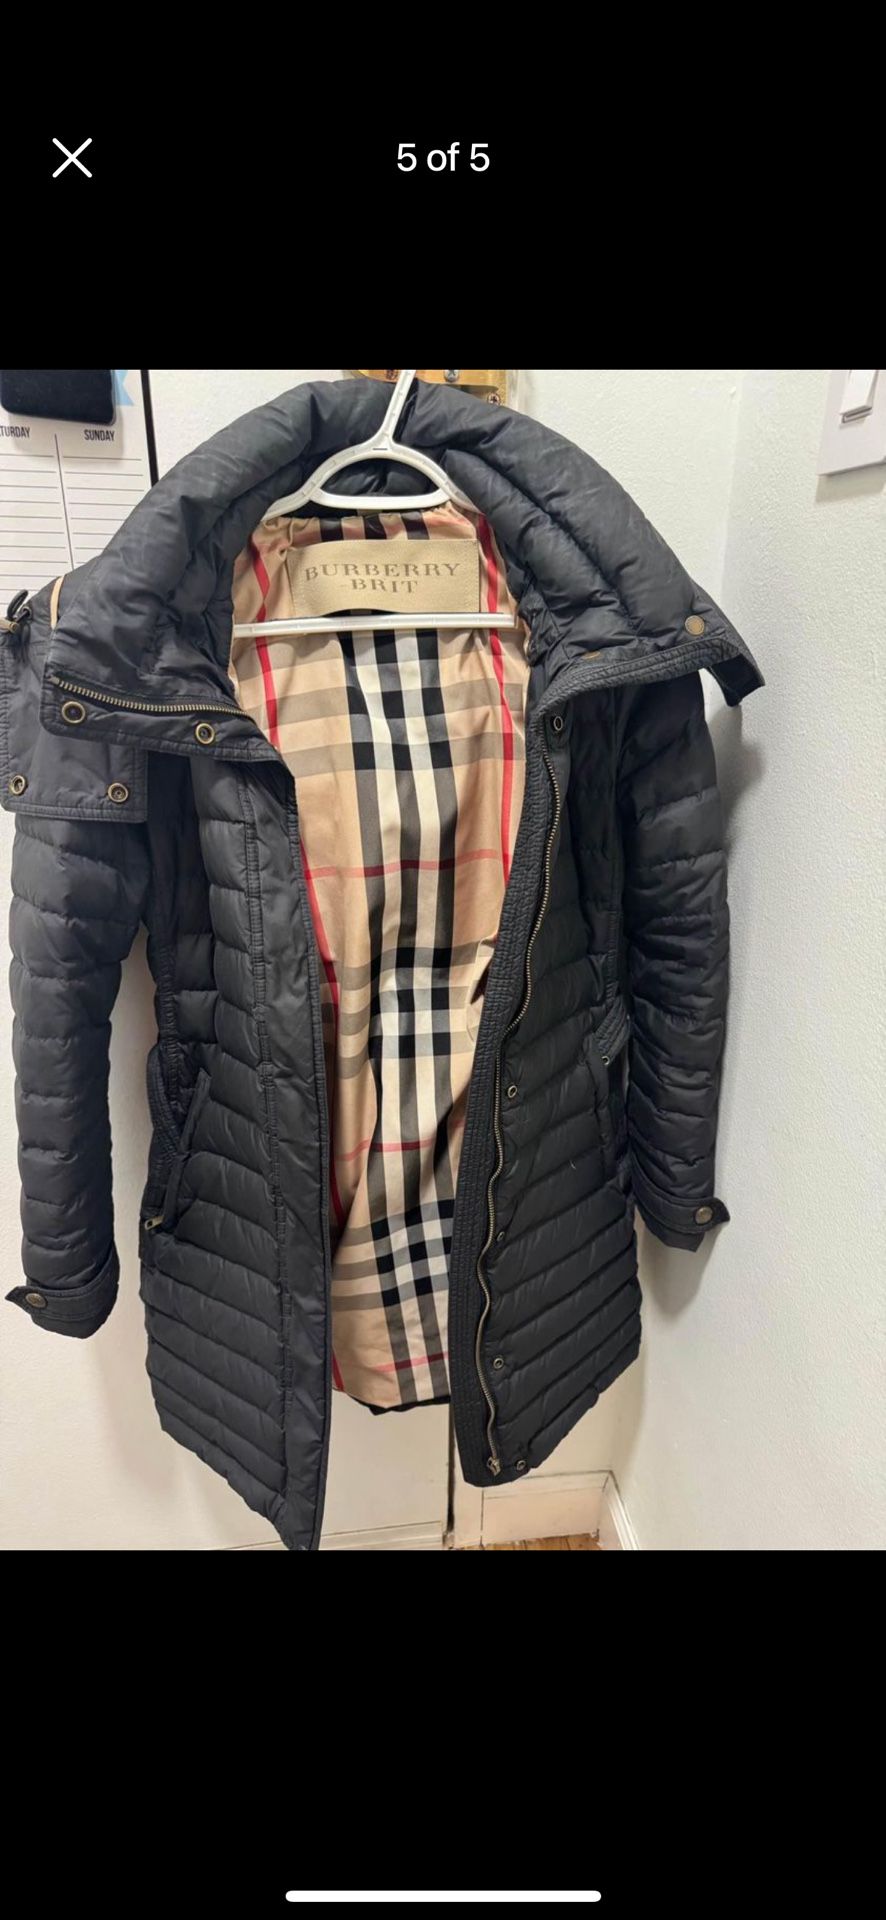 Burberry Winter Jacket Size S